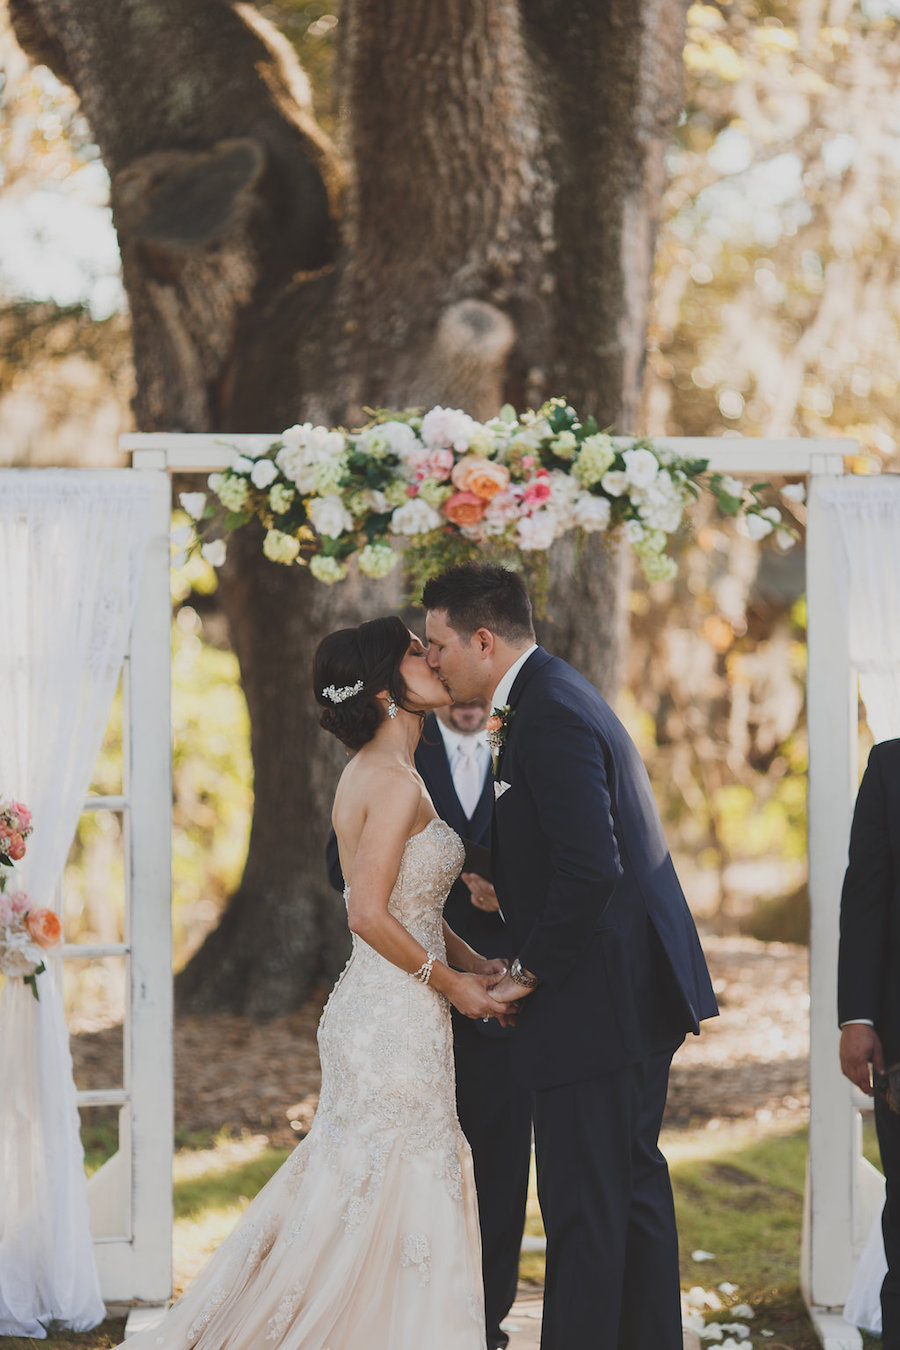 Rustic Outdoor Wedding Ceremony Bride and Groom First Kiss Portrait | Tampa Wedding Venue Cross Creek Ranch